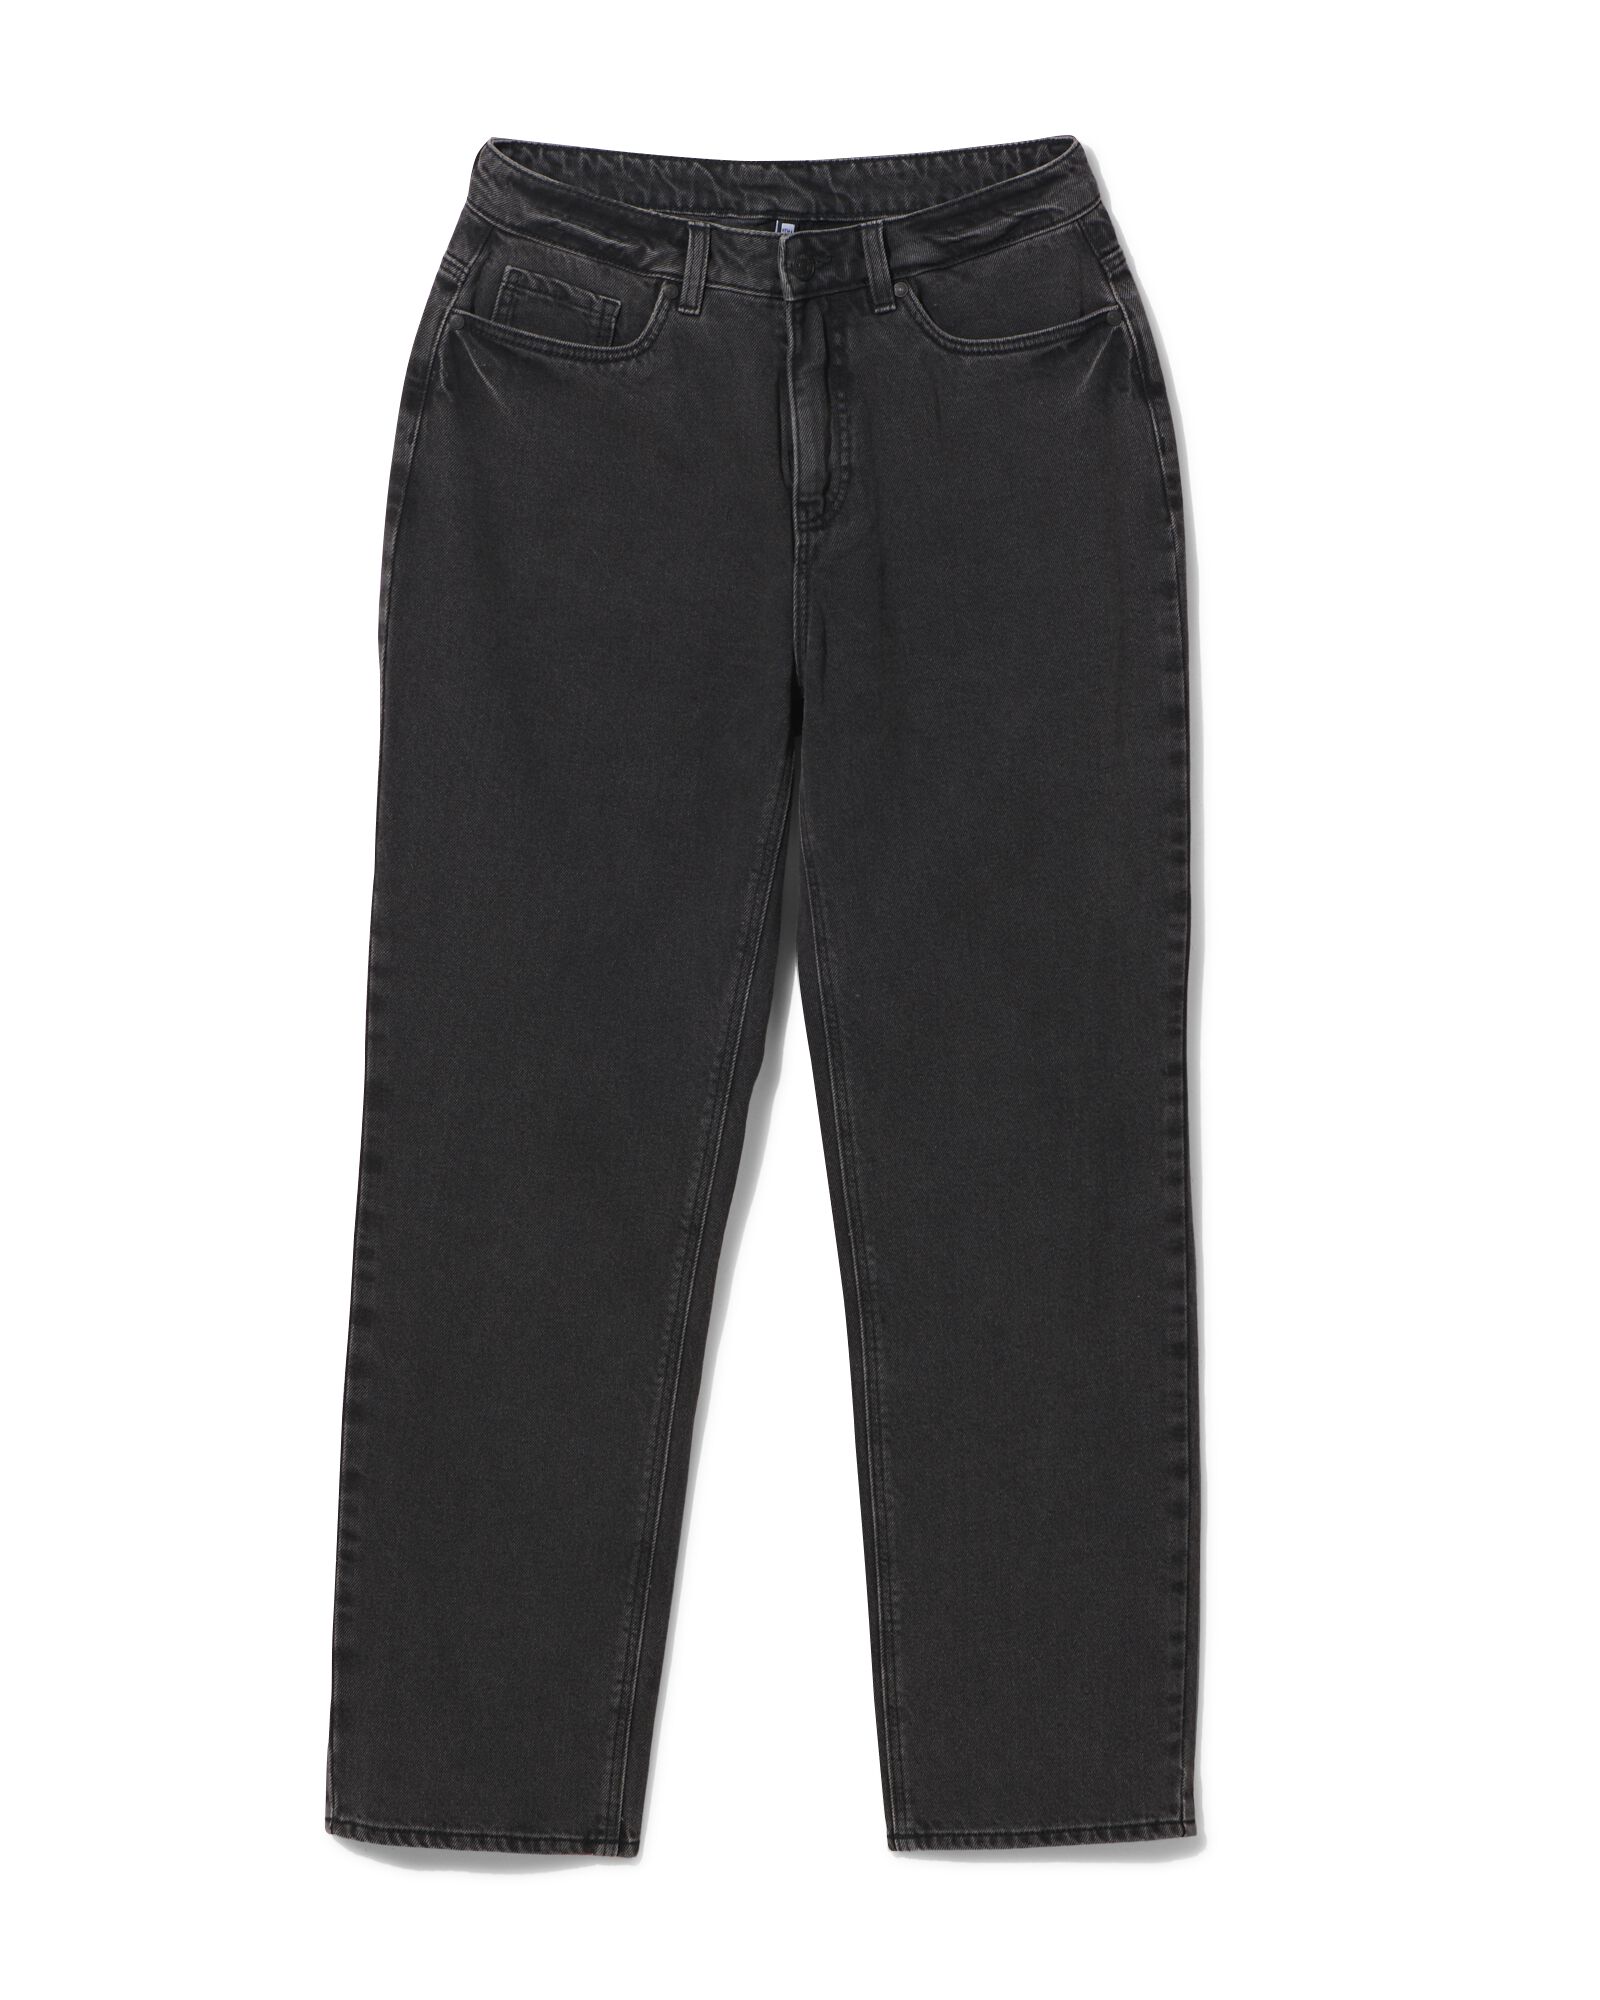 dames jeans straight fit donkergrijs 36 - 36319981 - HEMA